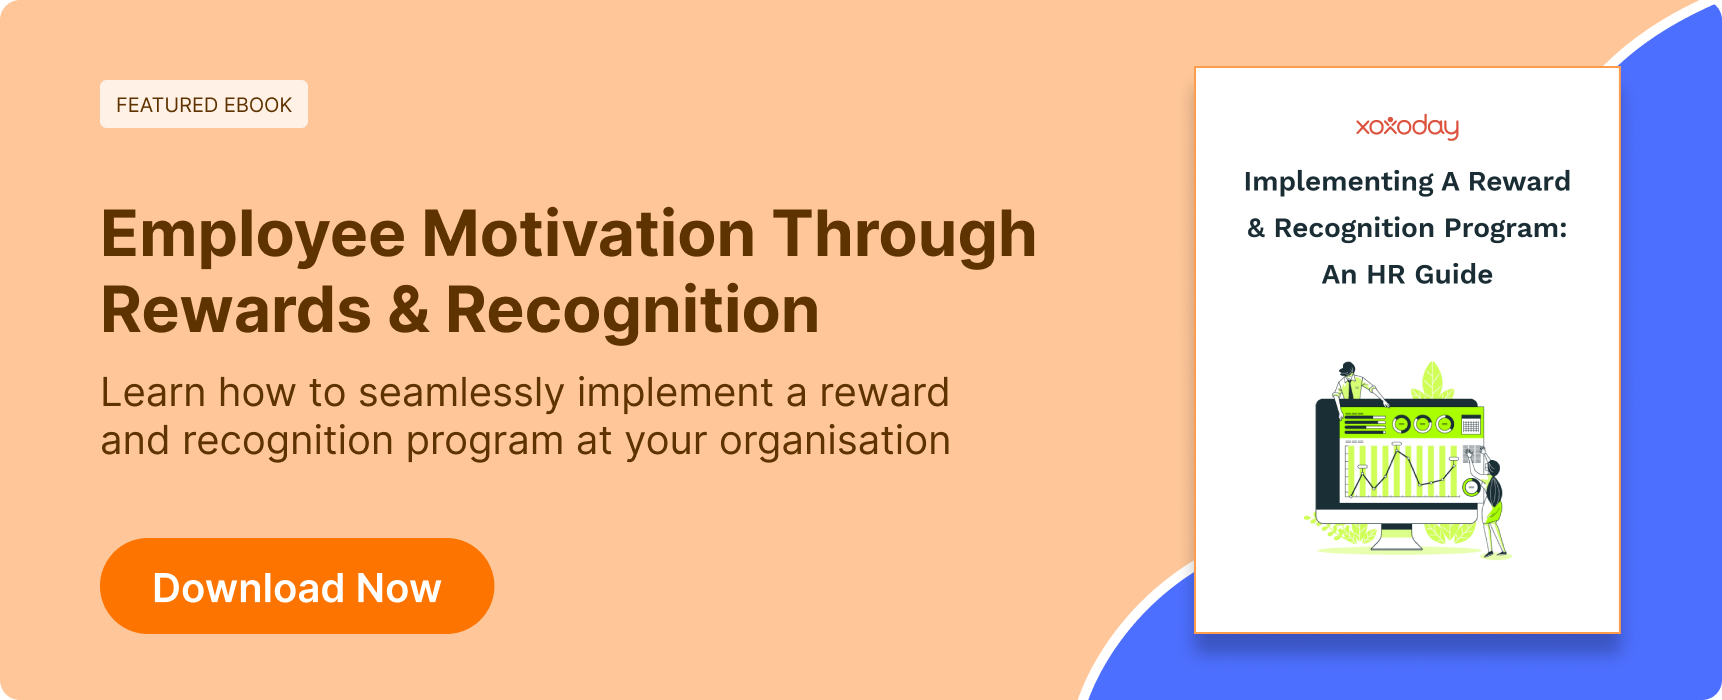 Implementing a reward & recognition program: An HR guide